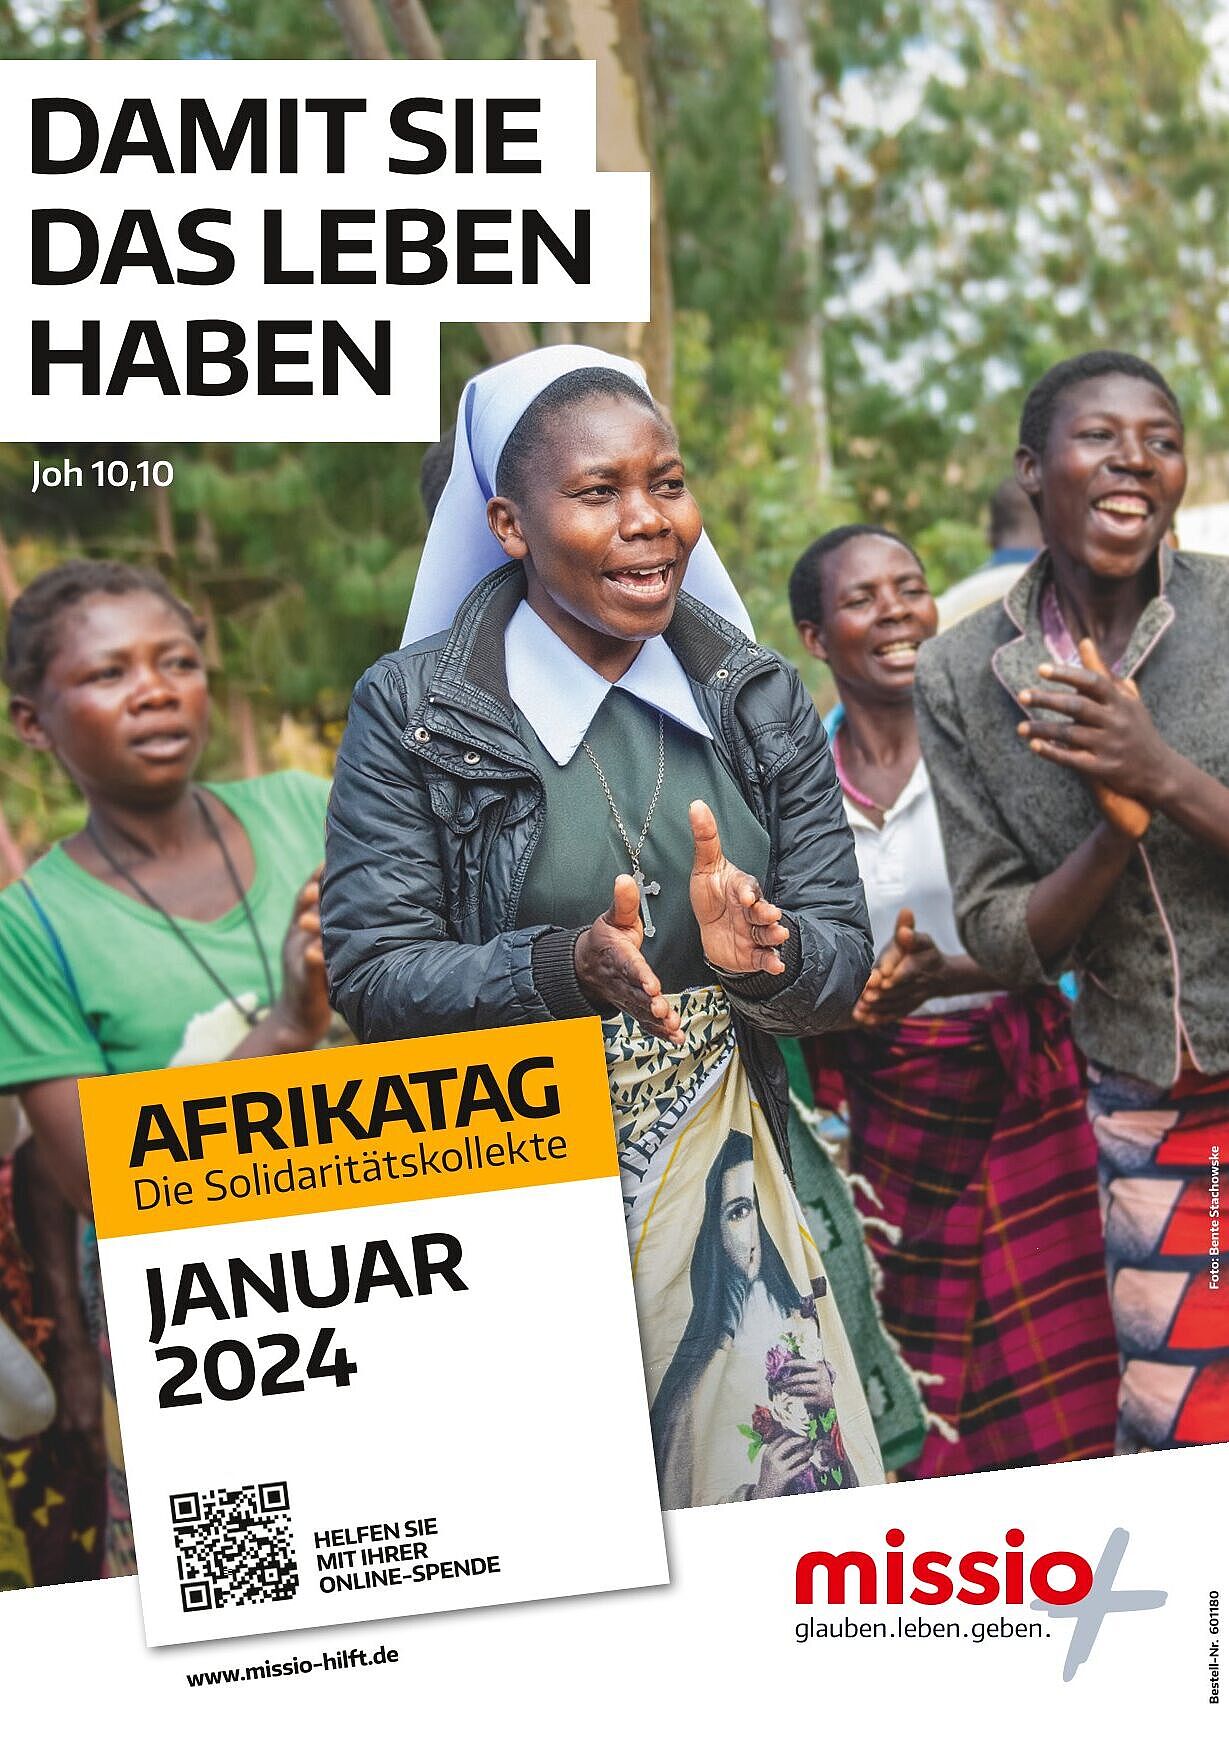 Plakat zum Afrikatag 2024